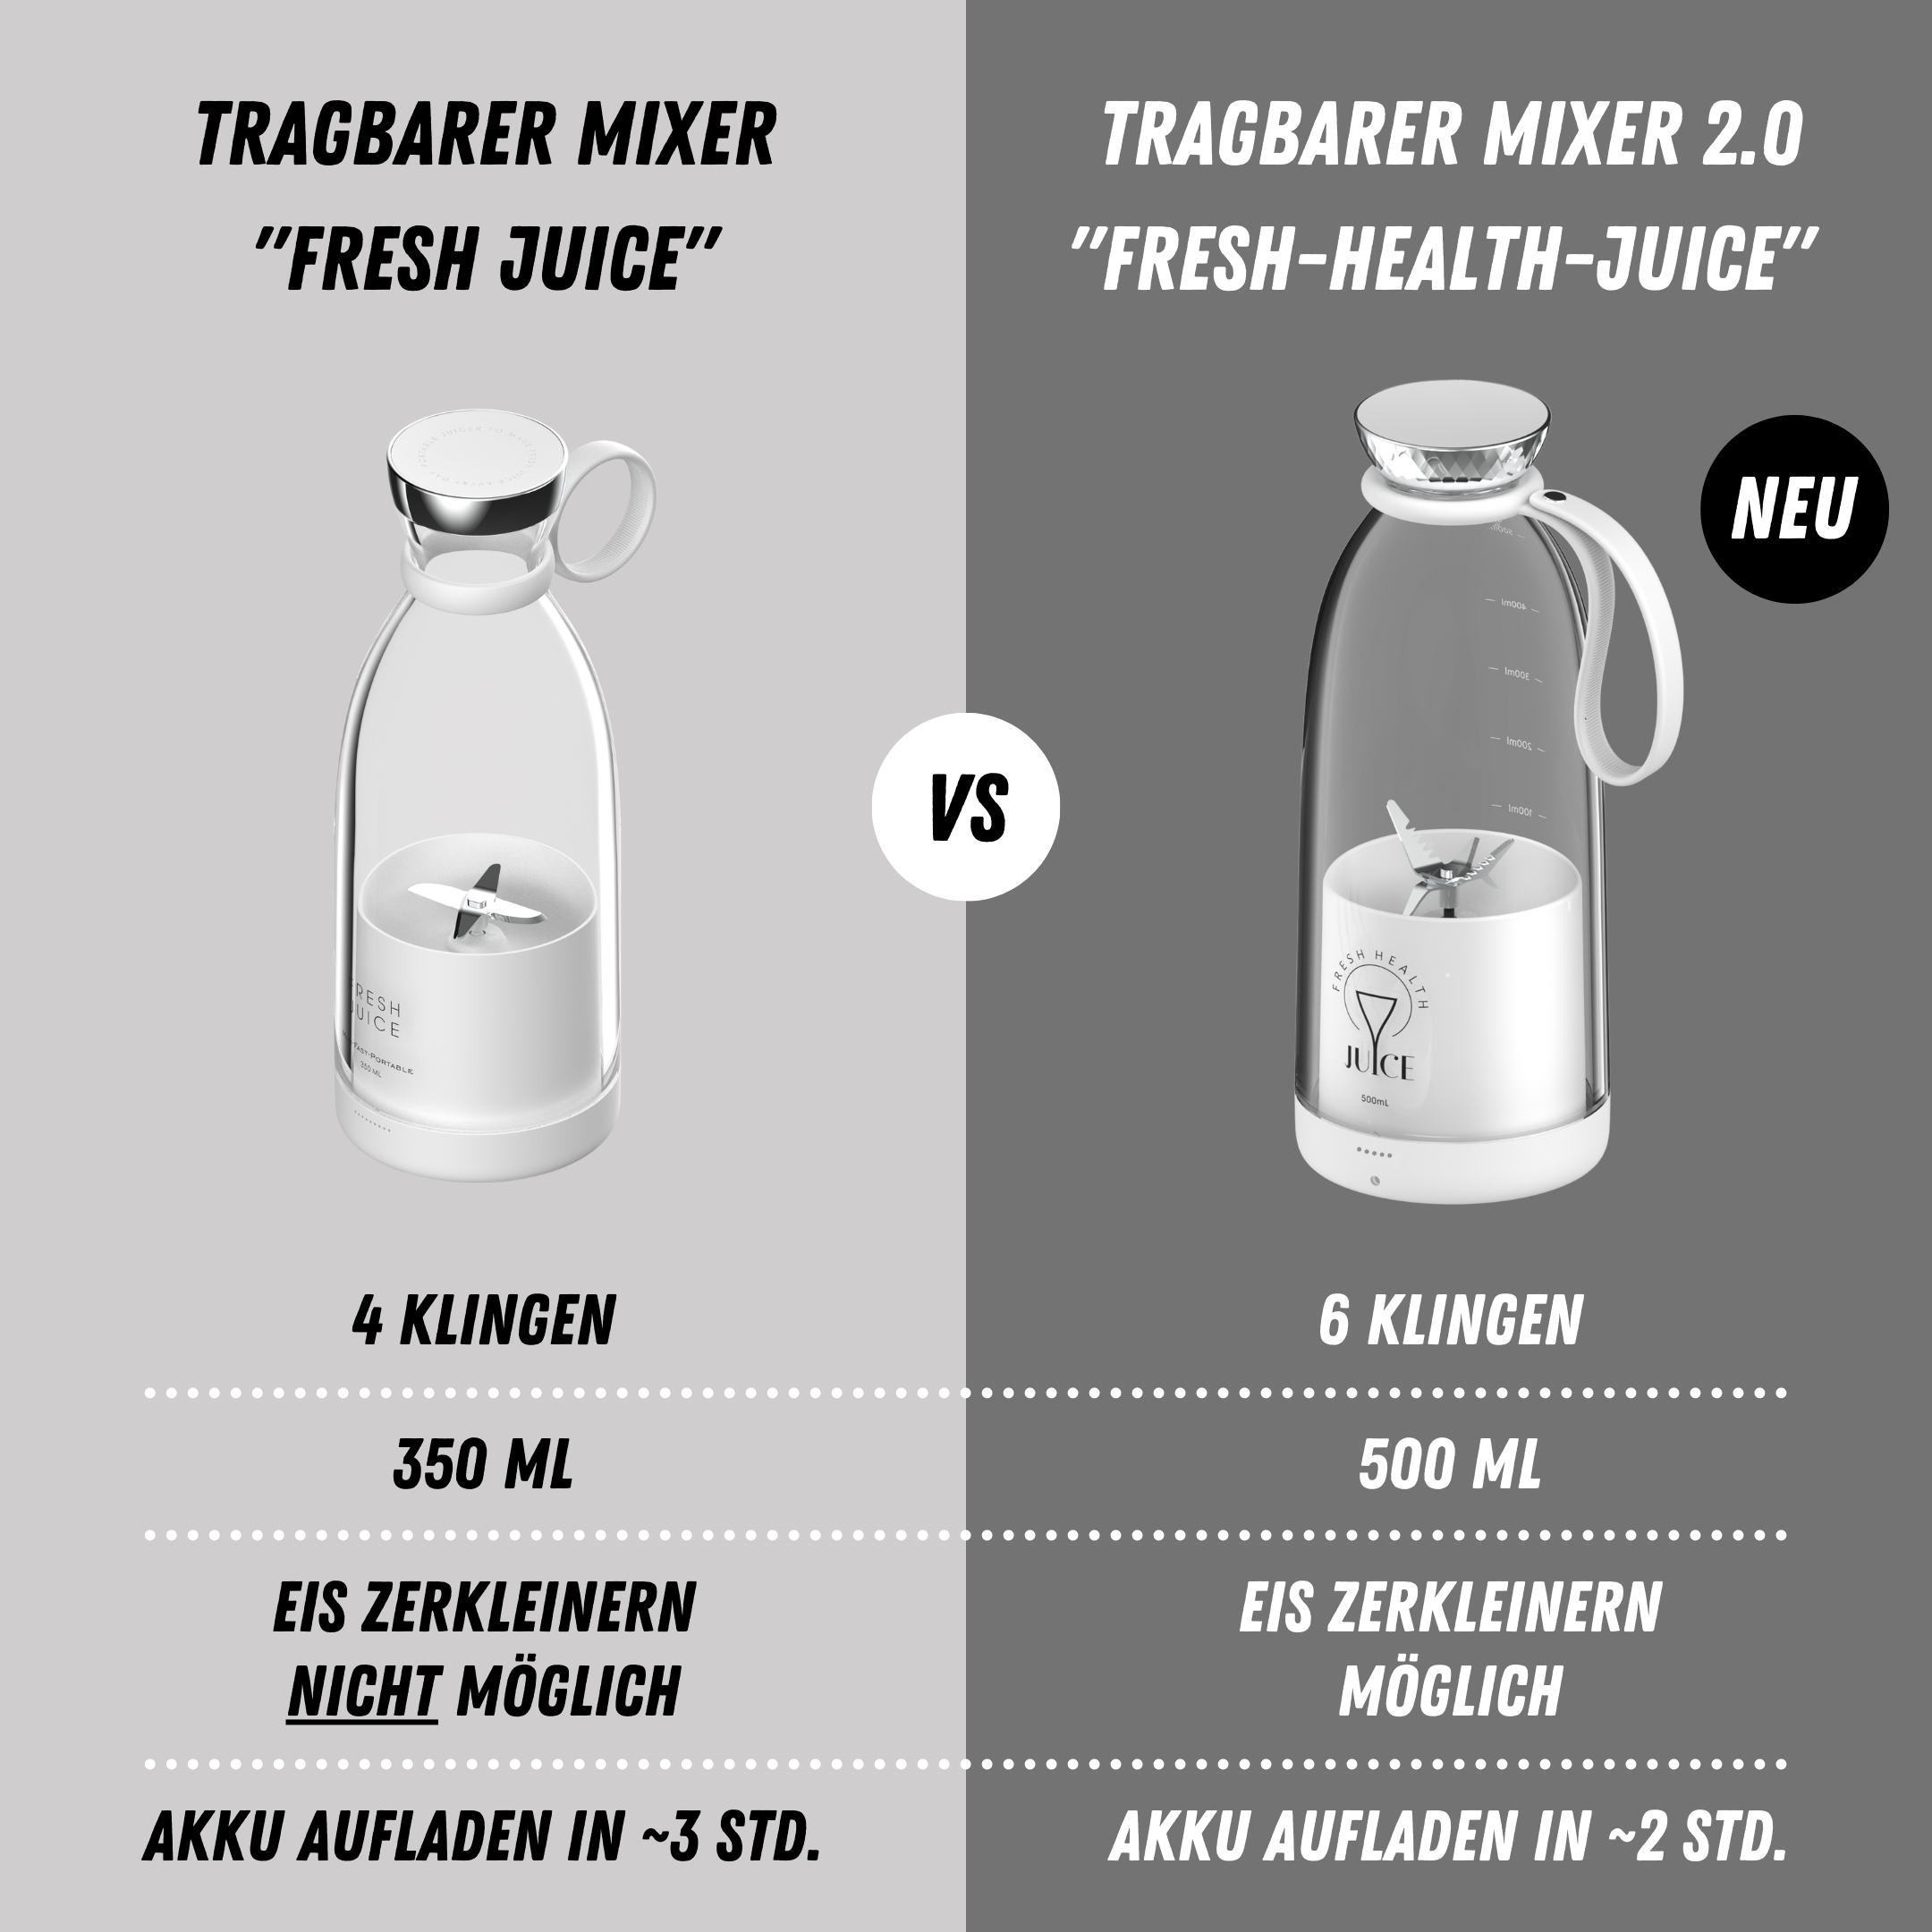 Tragbarer Mixer 2.0 "fresh-health-juice"